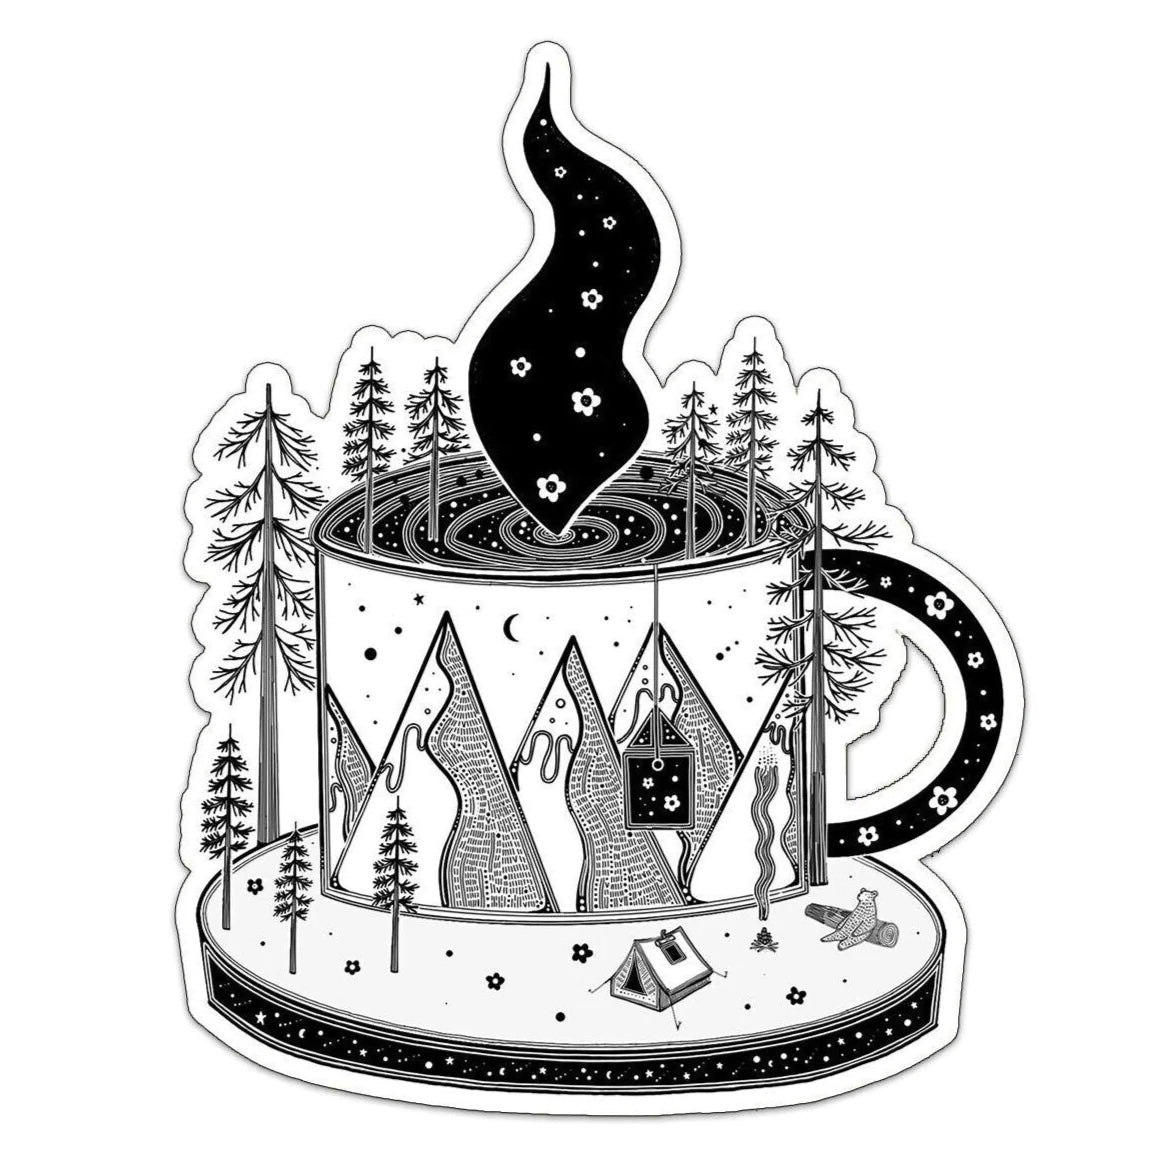 The Camping Mug / Sticker